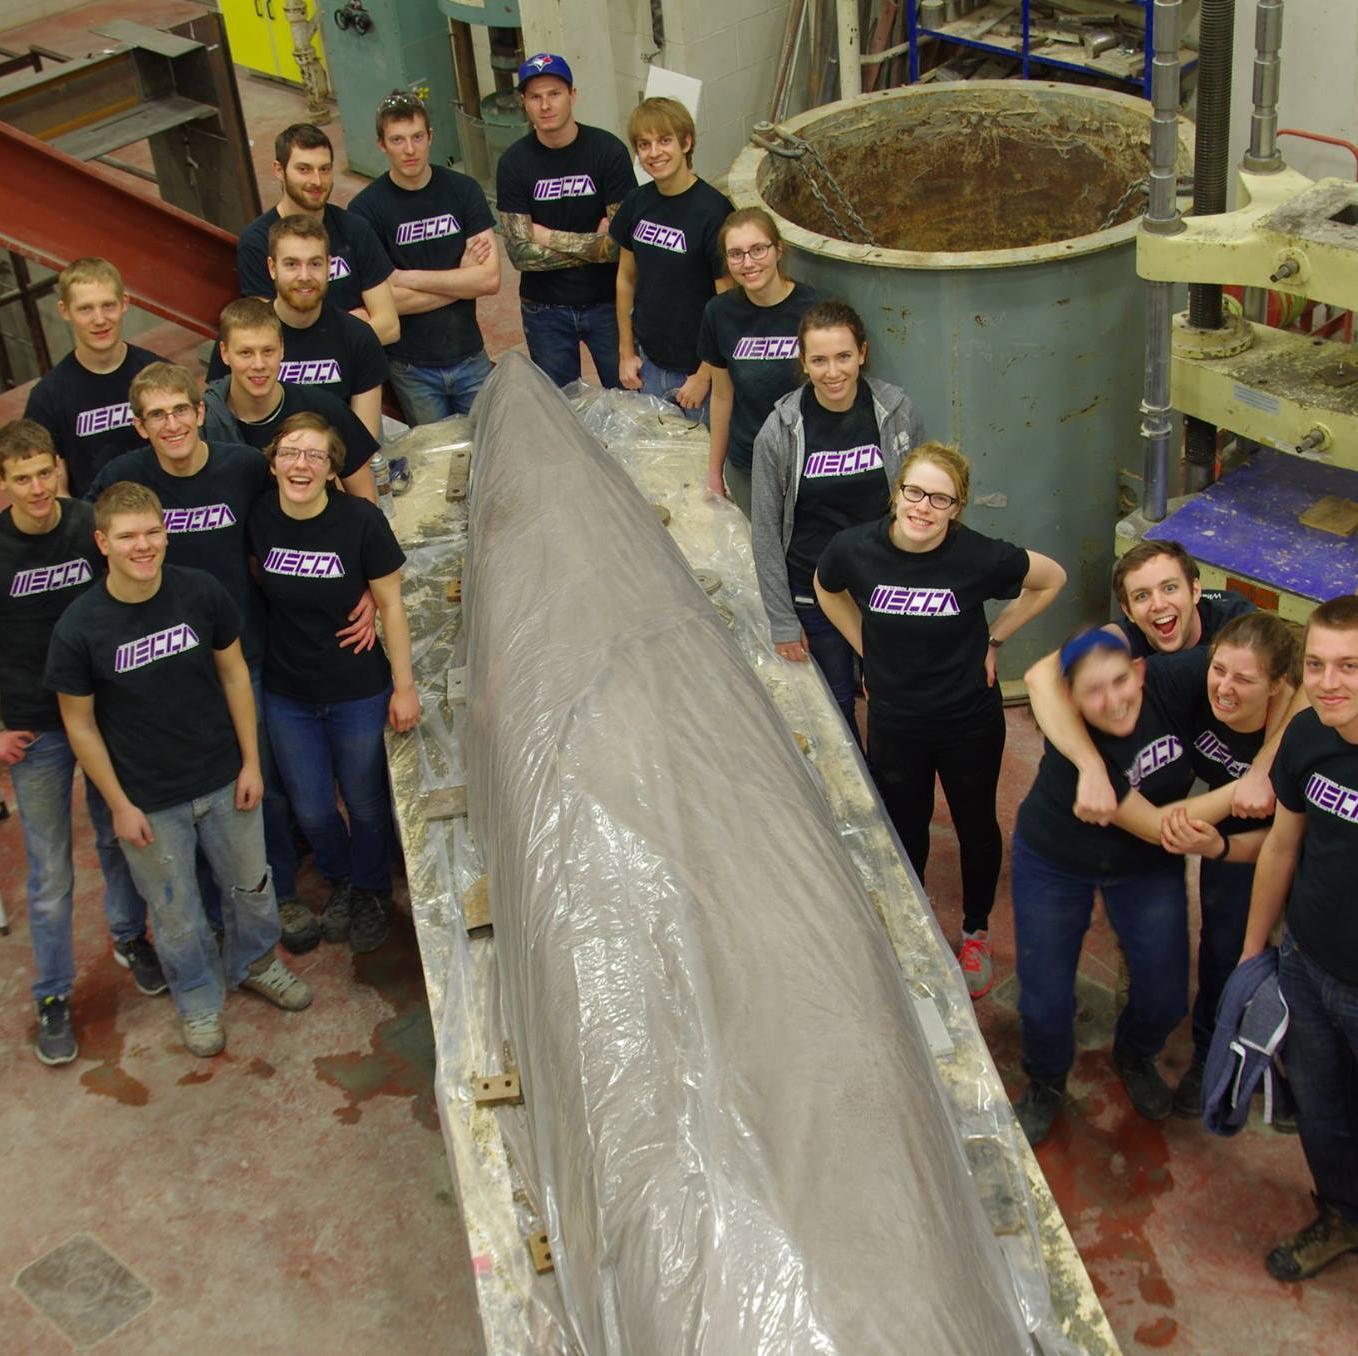 Design, build & race a concrete canoe with us!